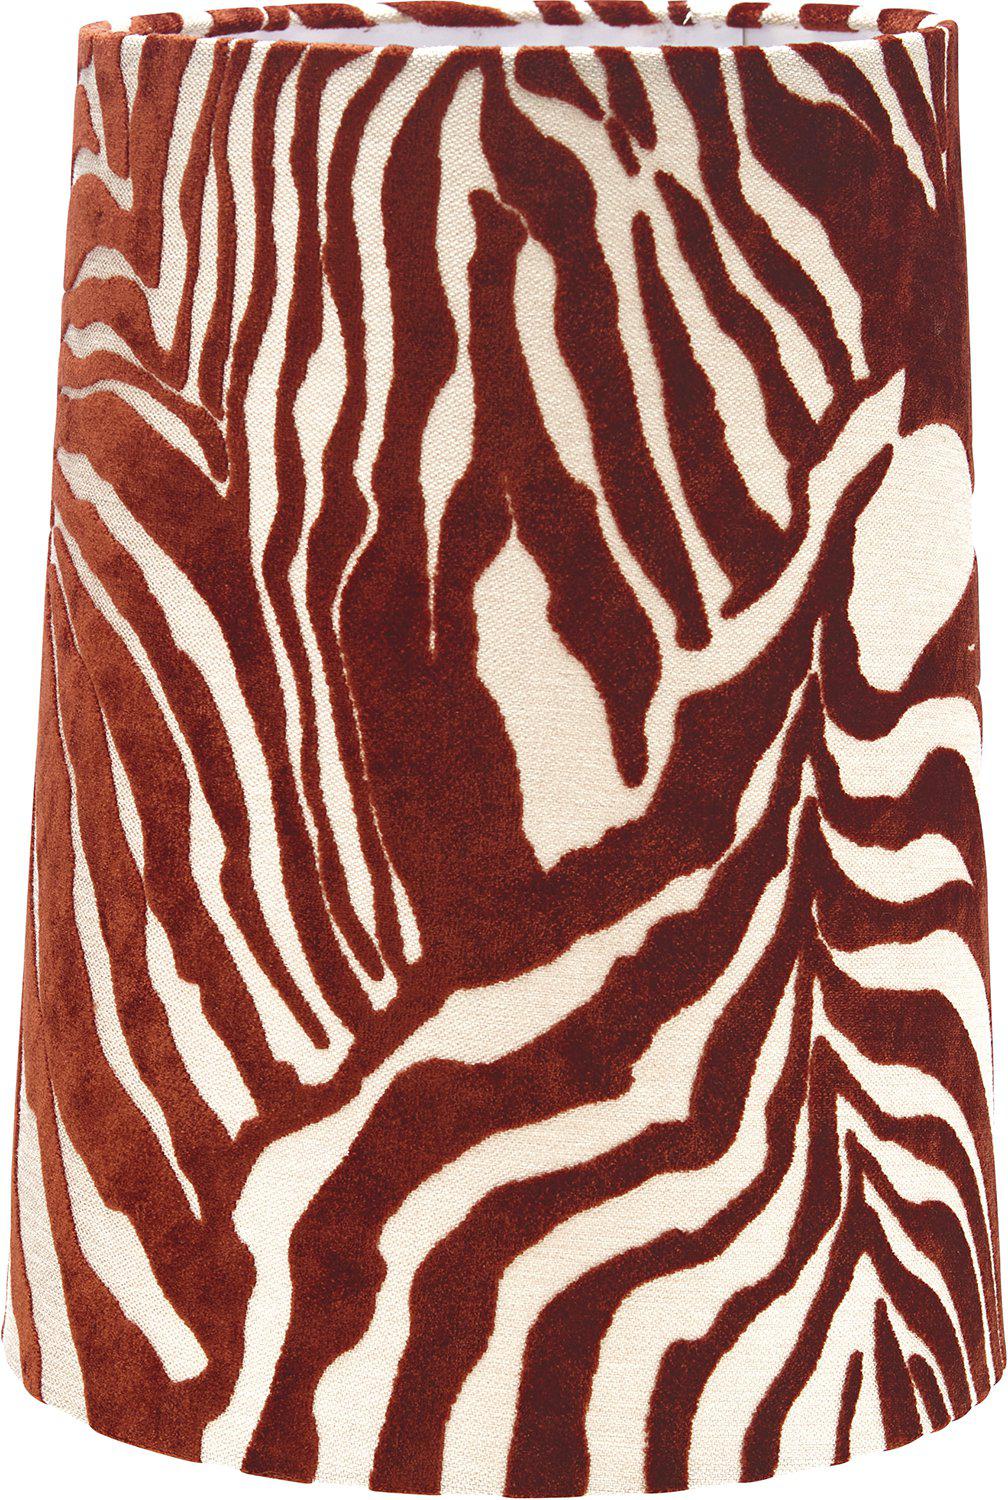 Braun (Zebra Rost 20cm)